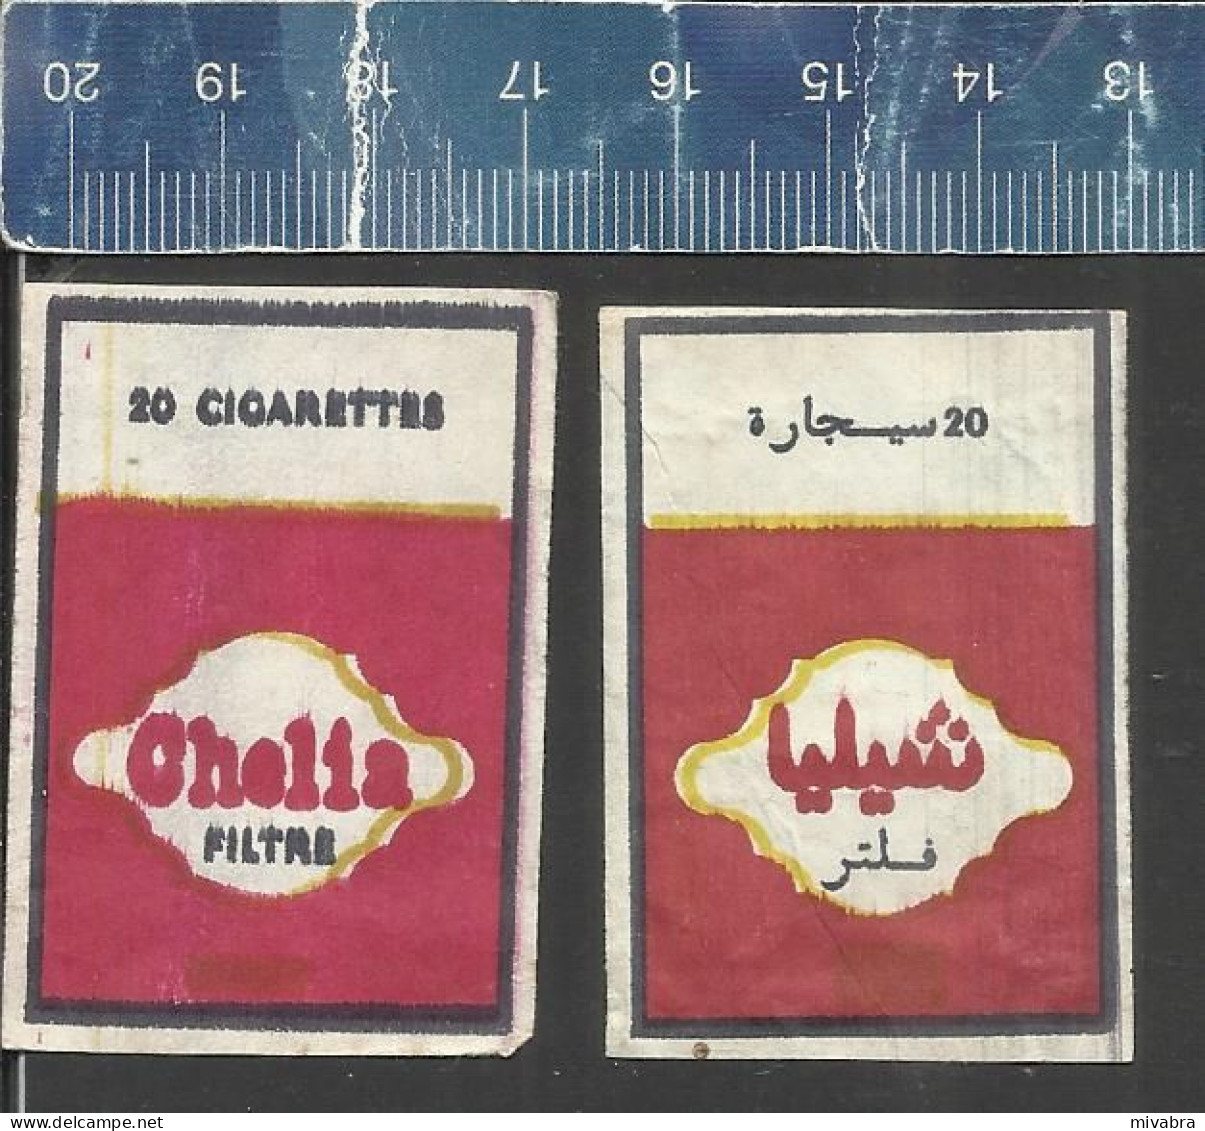 CHELIA FILTRE ( CIGARETTES SIGAETTEN ) - OLD MATCHBOX LABELS  ALGERIA - Matchbox Labels